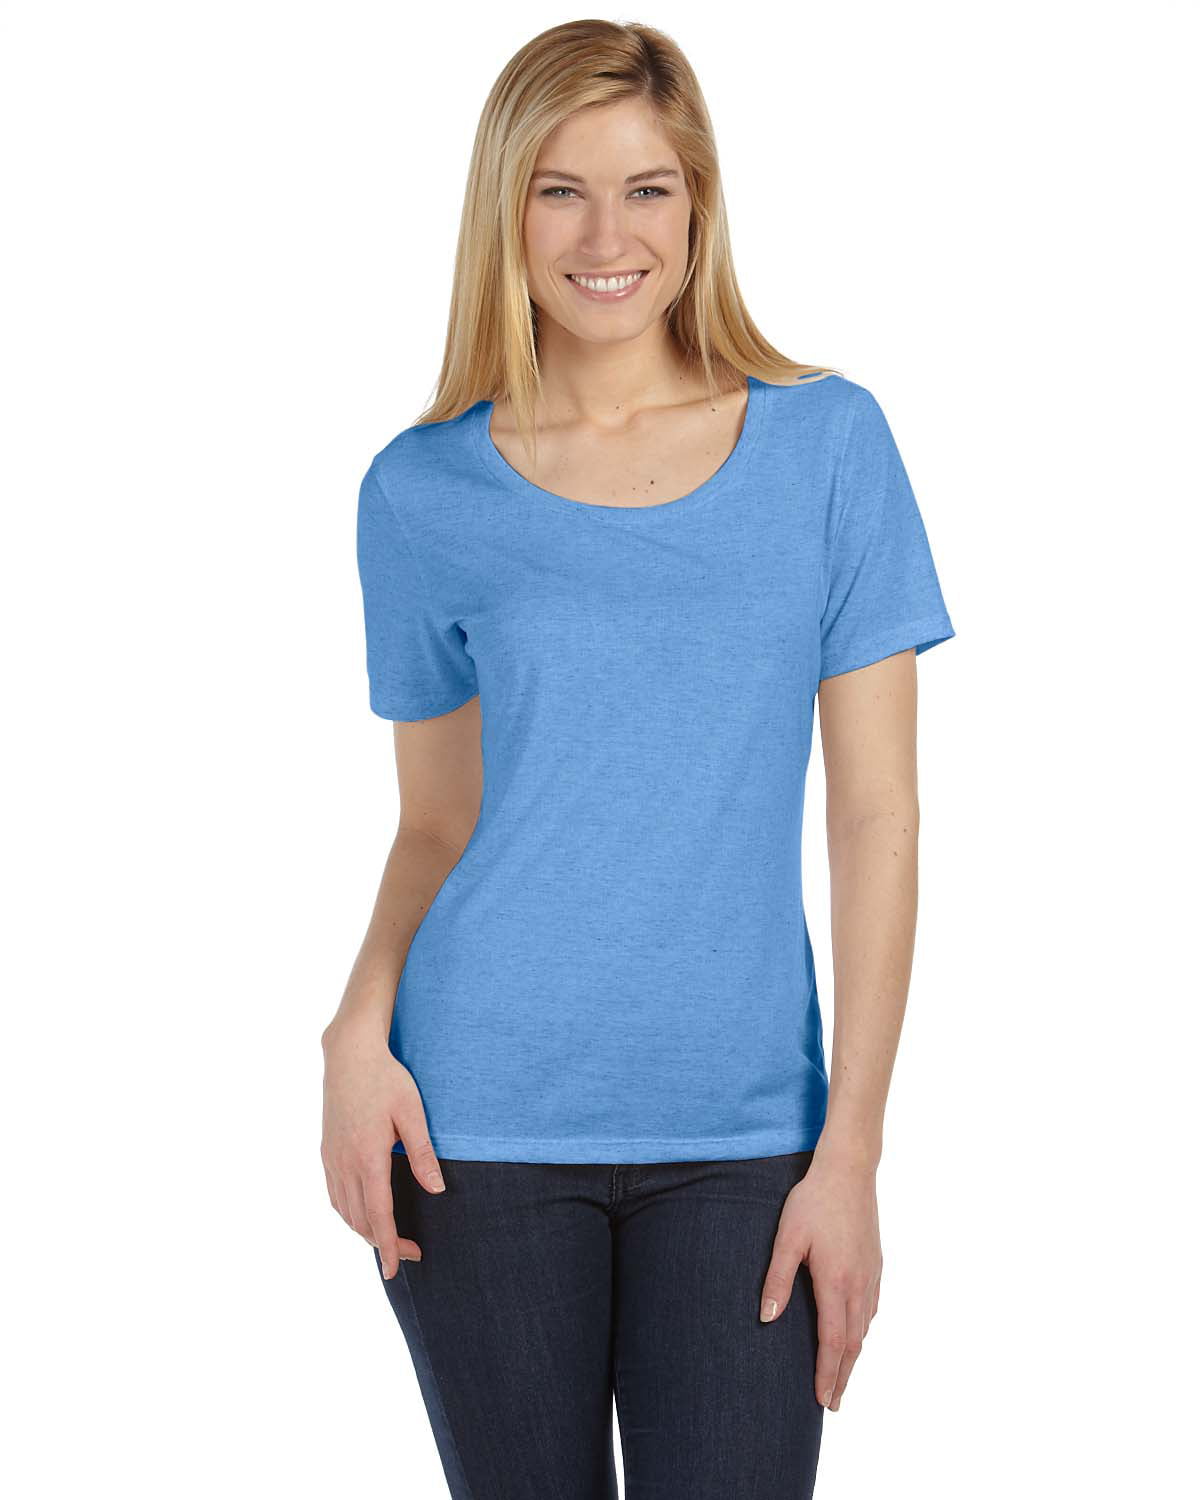 Bella Missy Short-Sleeve Scoop Neck Blank T Shirt Girls' 6406 - Walmart.com